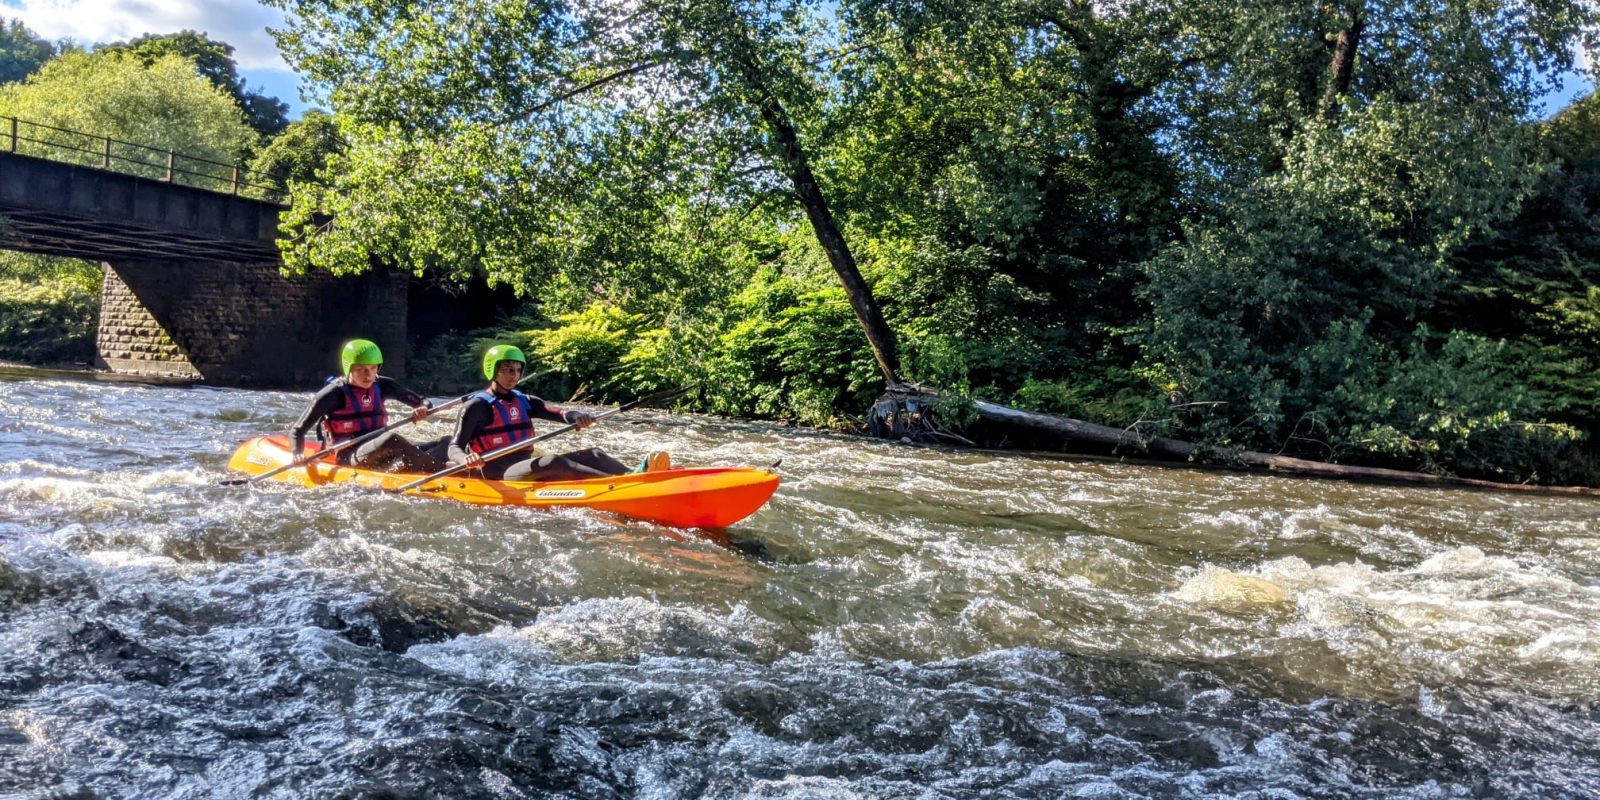 AAE students river kayaking